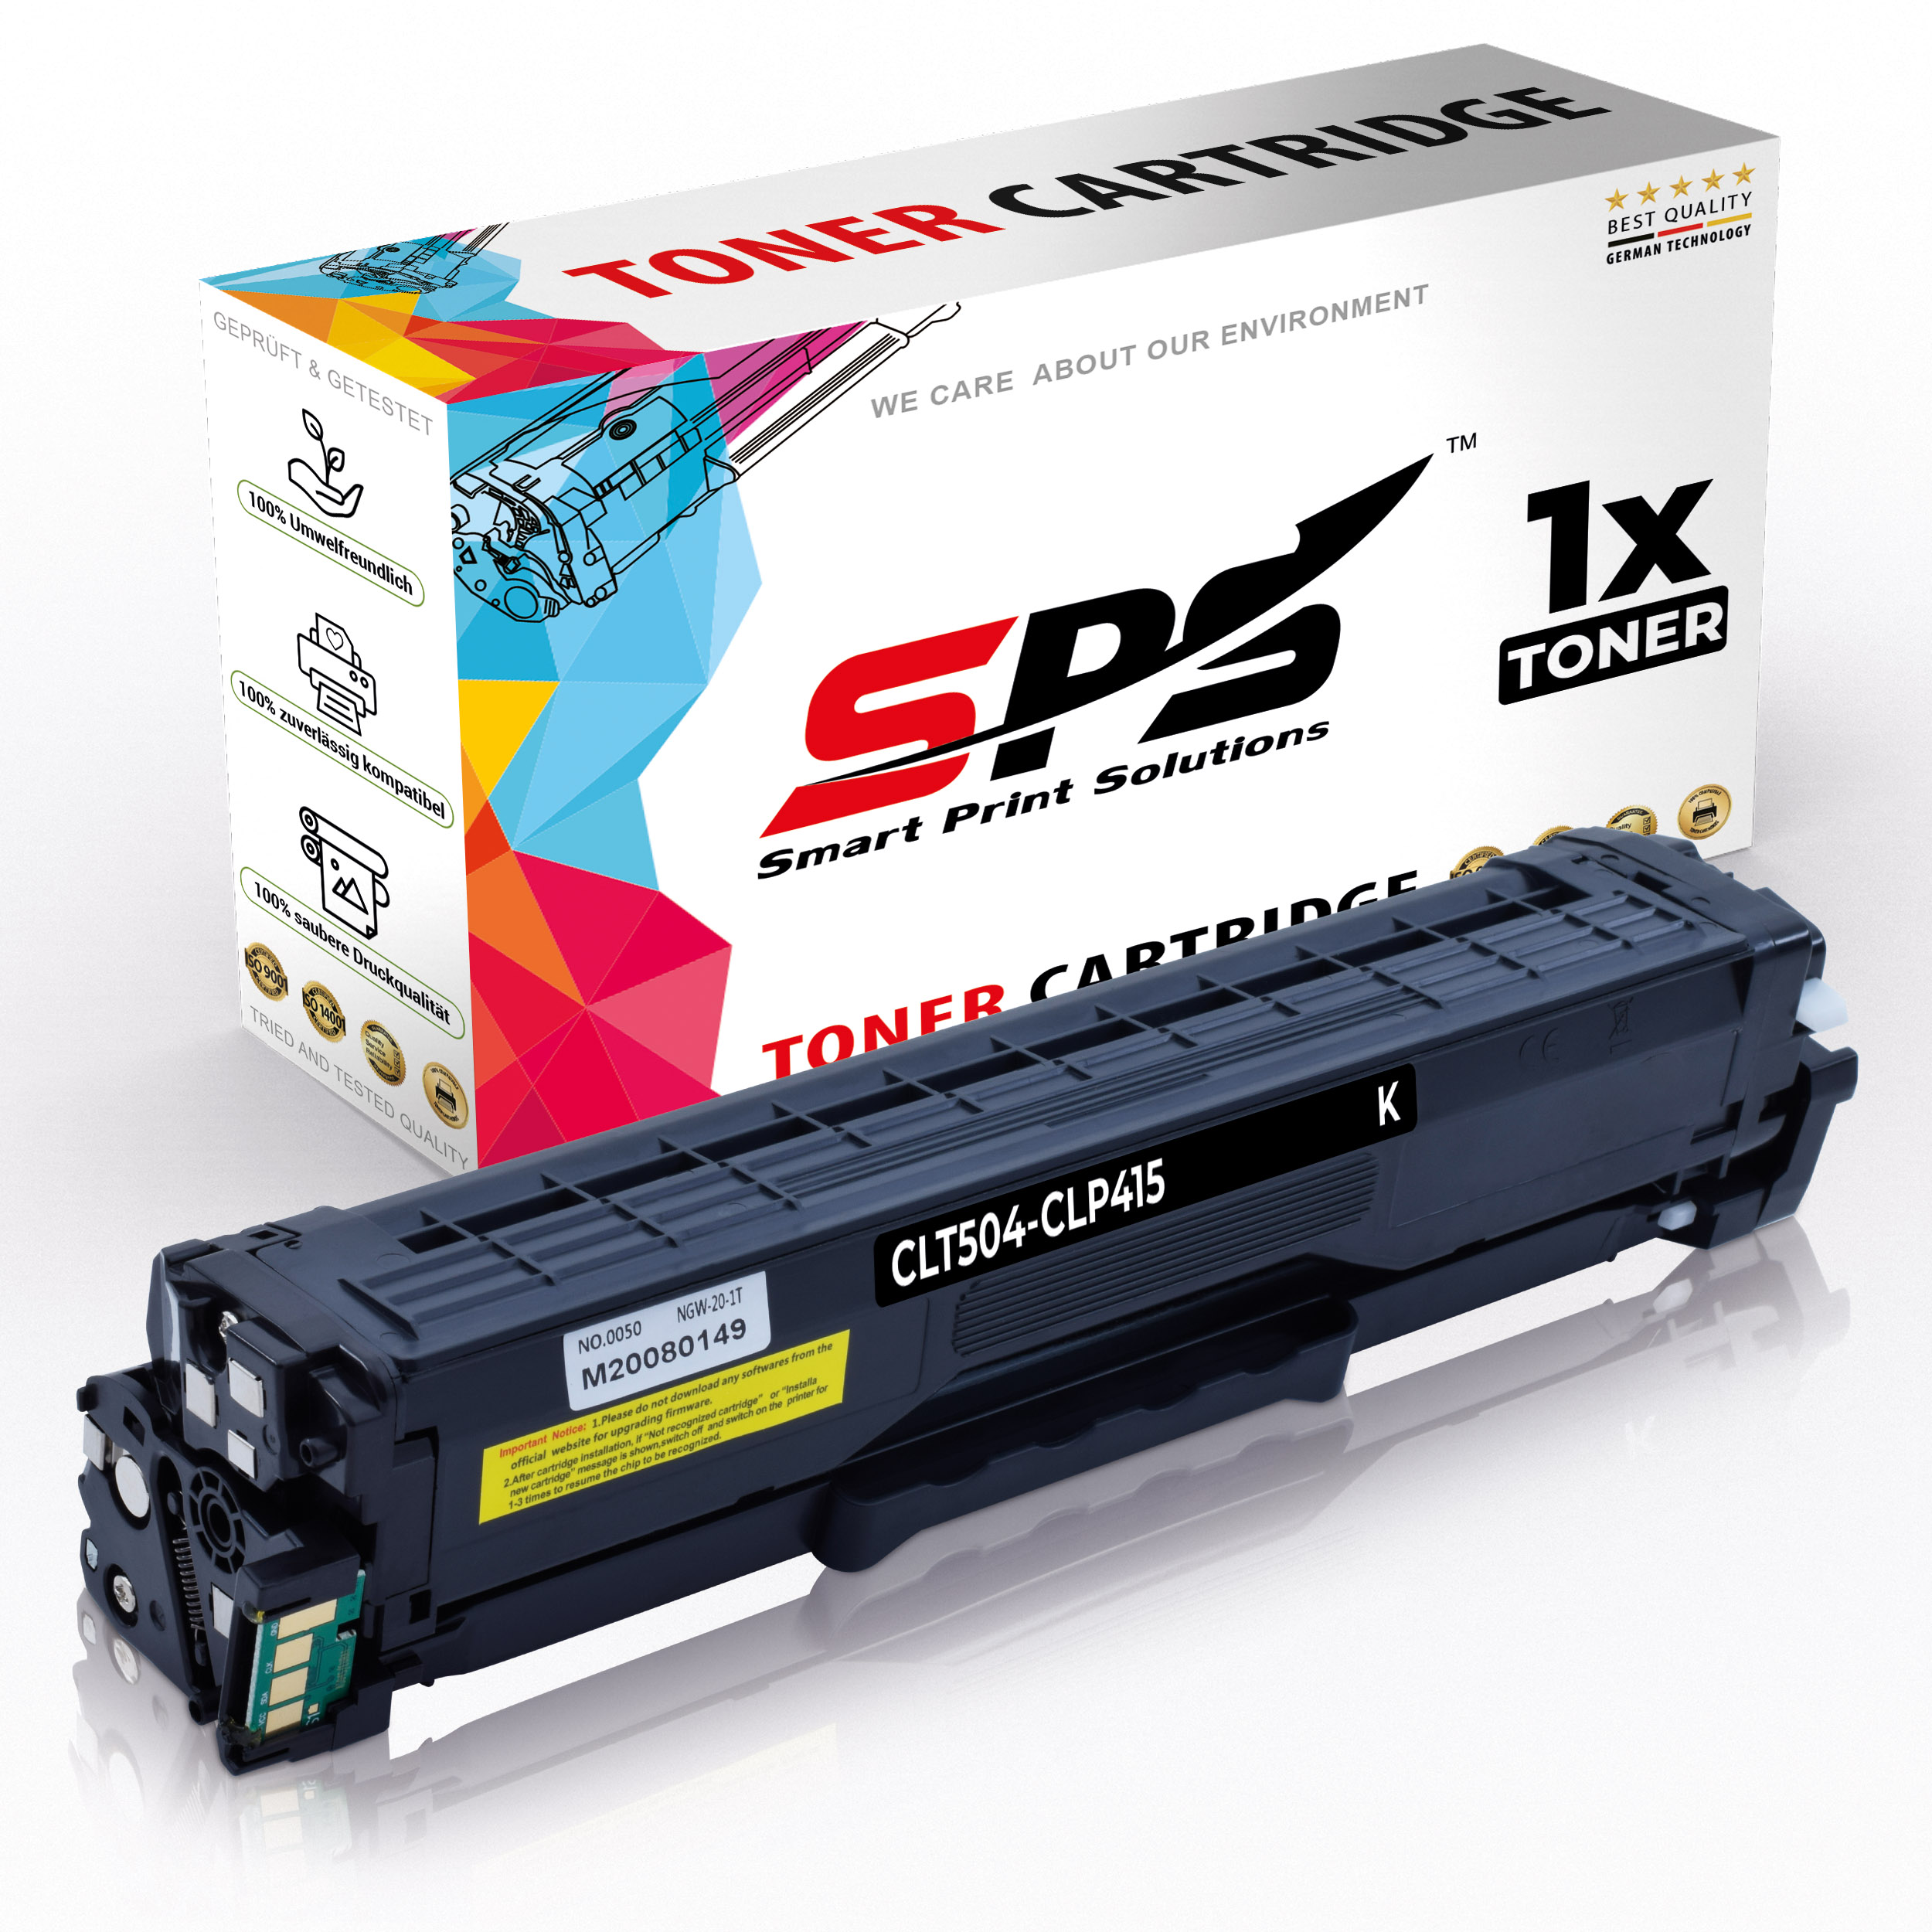 SPS Toner Xpress (K504 / Schwarz CLT-K504S SL-C1860FW) S-16095